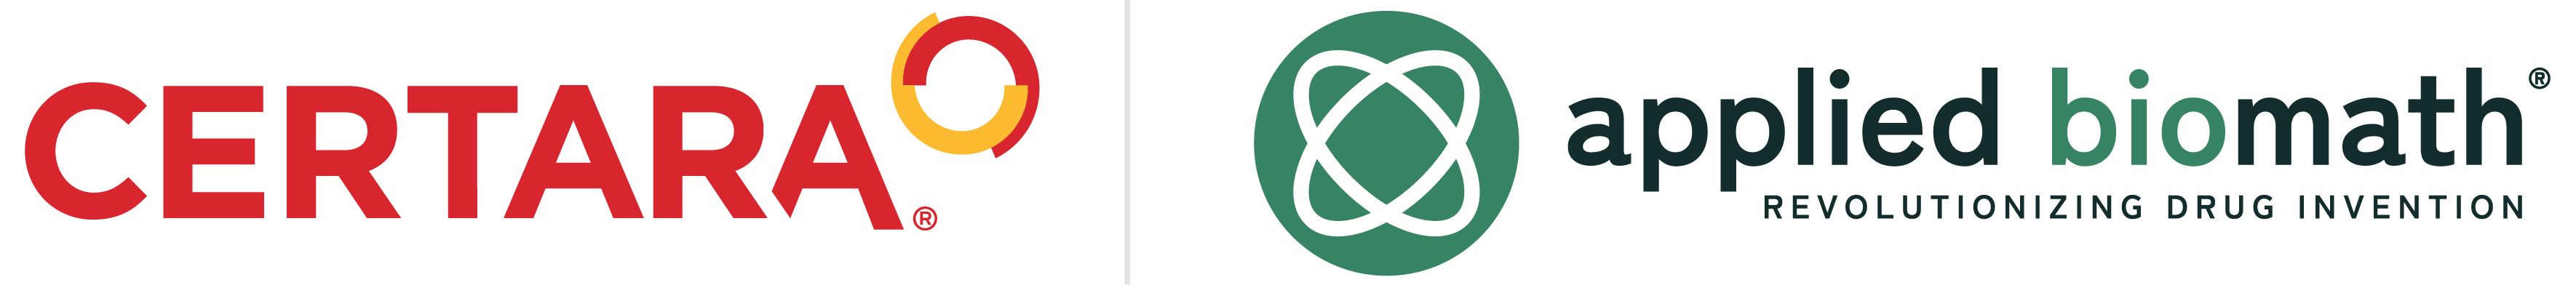 Certara and Applied BioMath logos